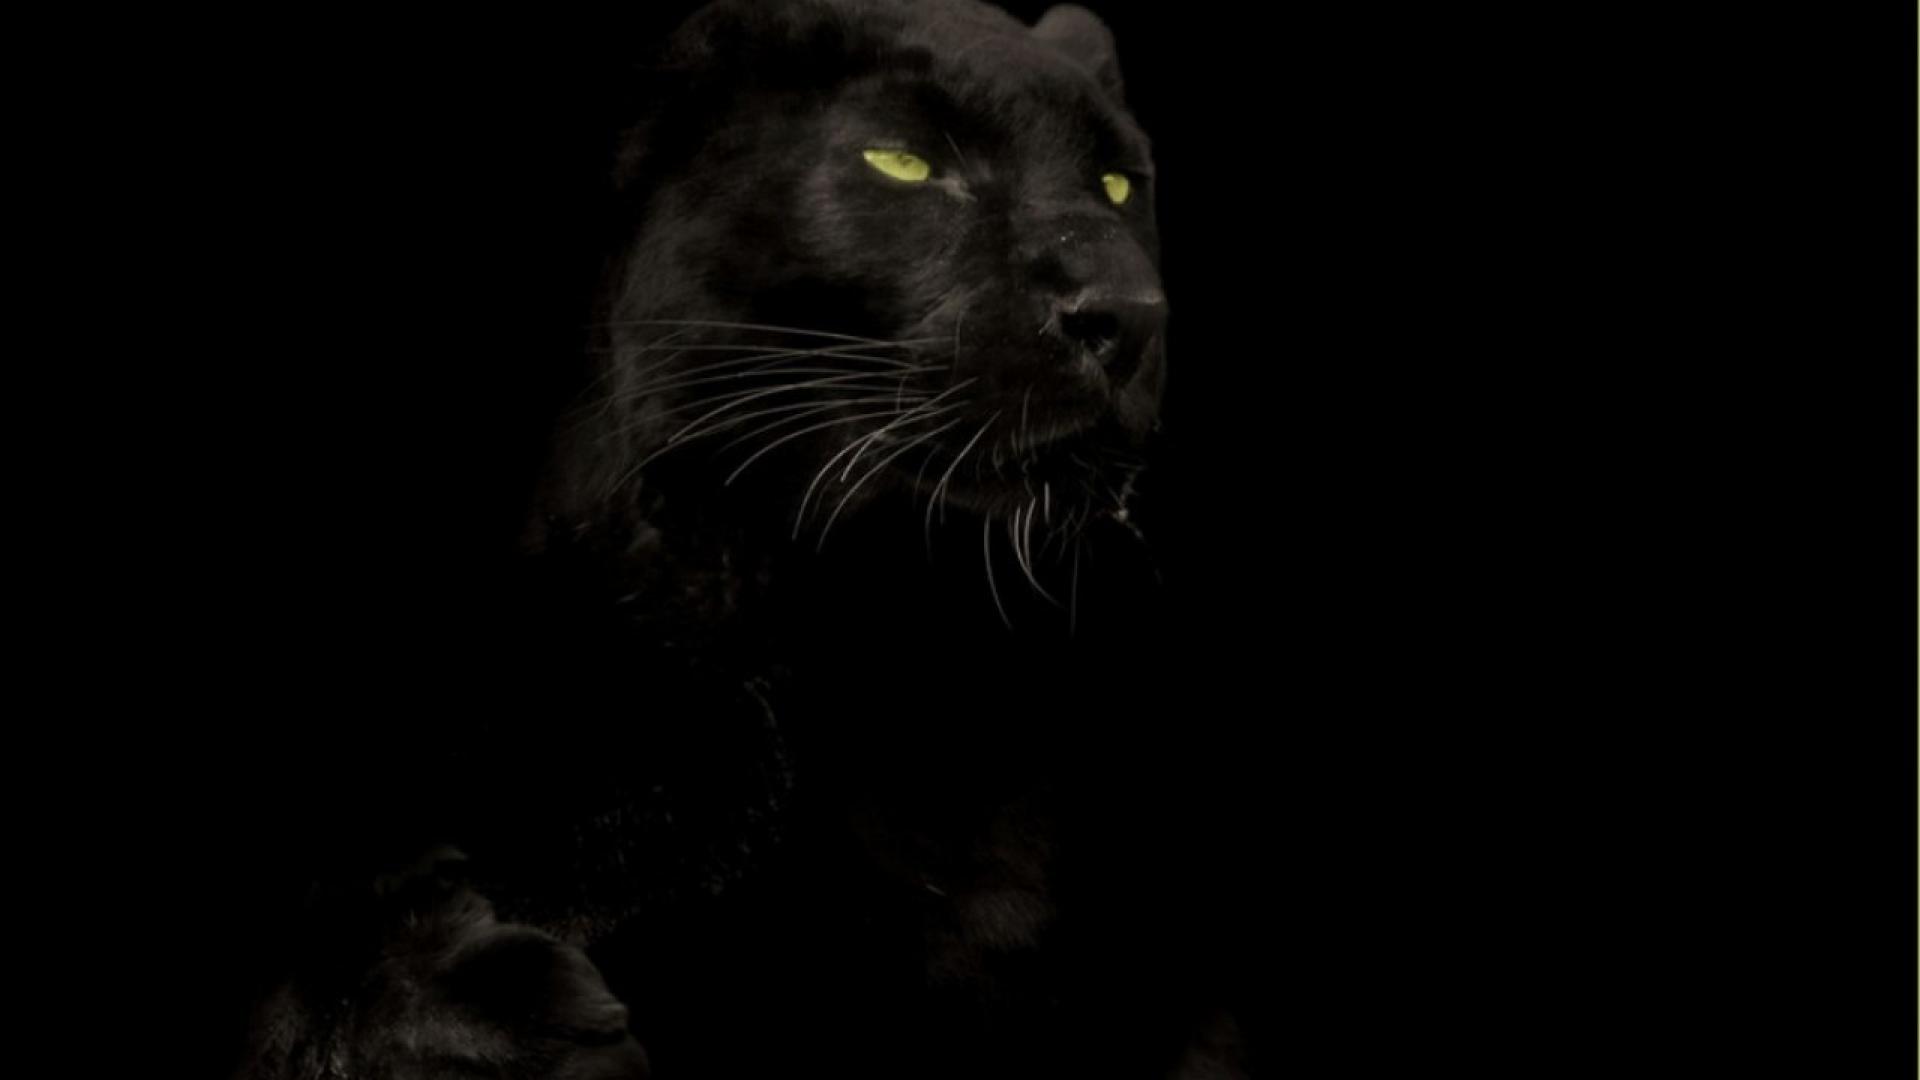 Cats animals black panther wallpaper | (12814)